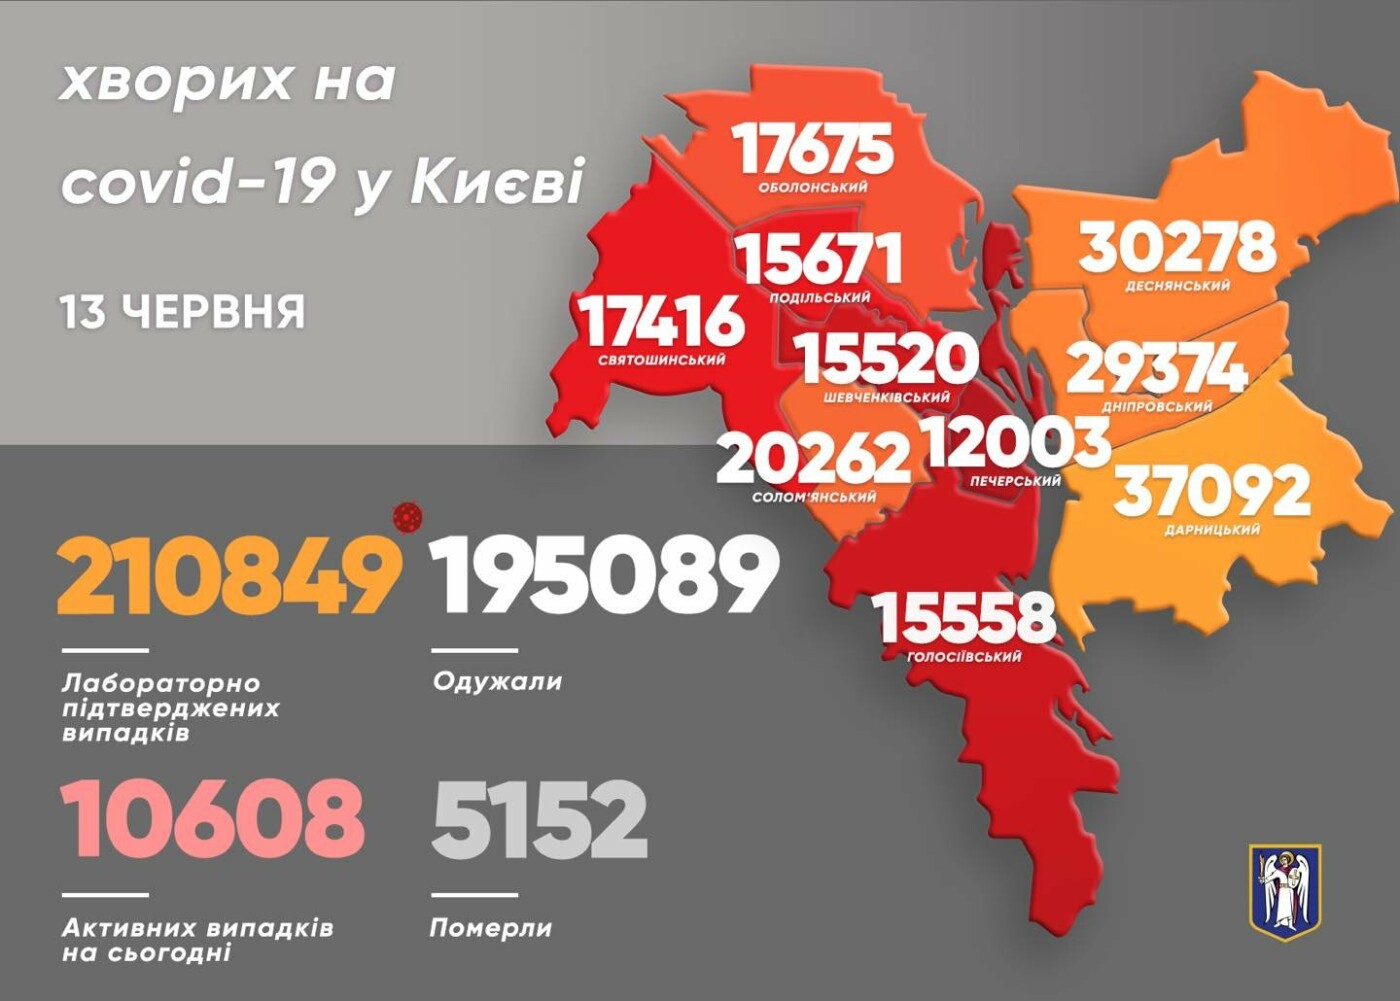 Коронавирус в Киеве: появилась статистика COVID-19 по районам за 13 июня